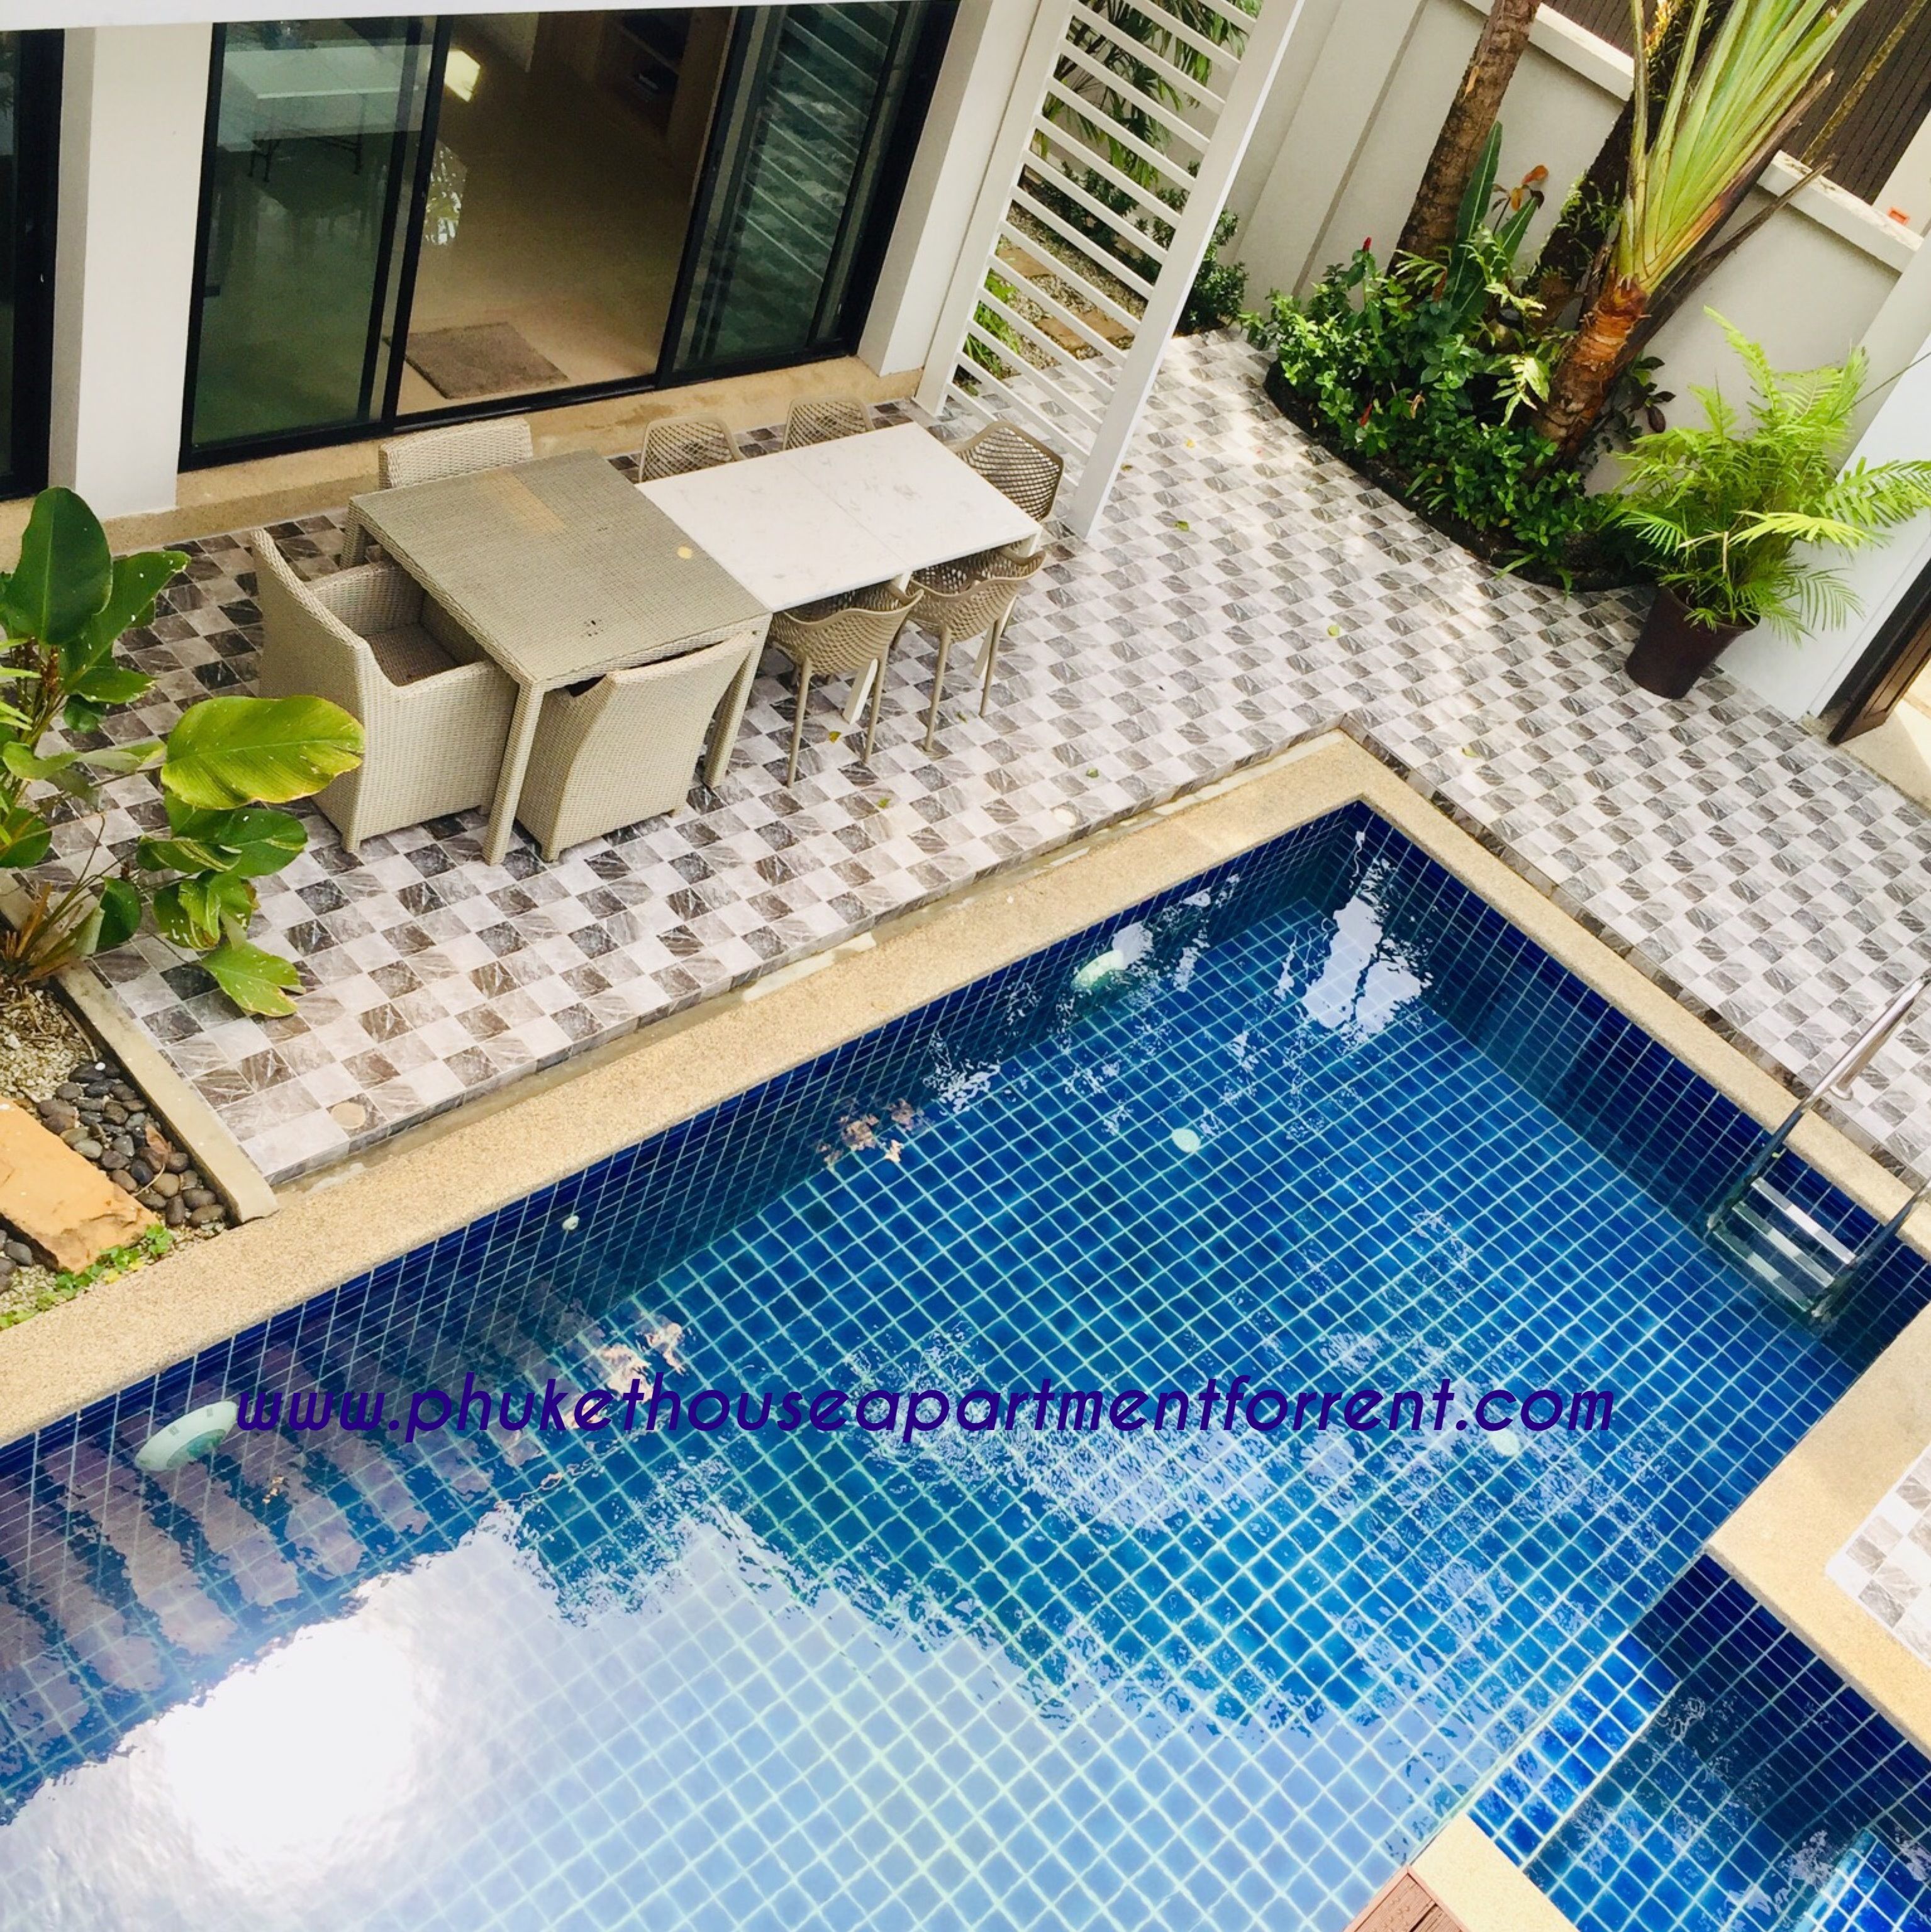 3 bedrooms villa for long term rent, Cherngtalay/ Phuket